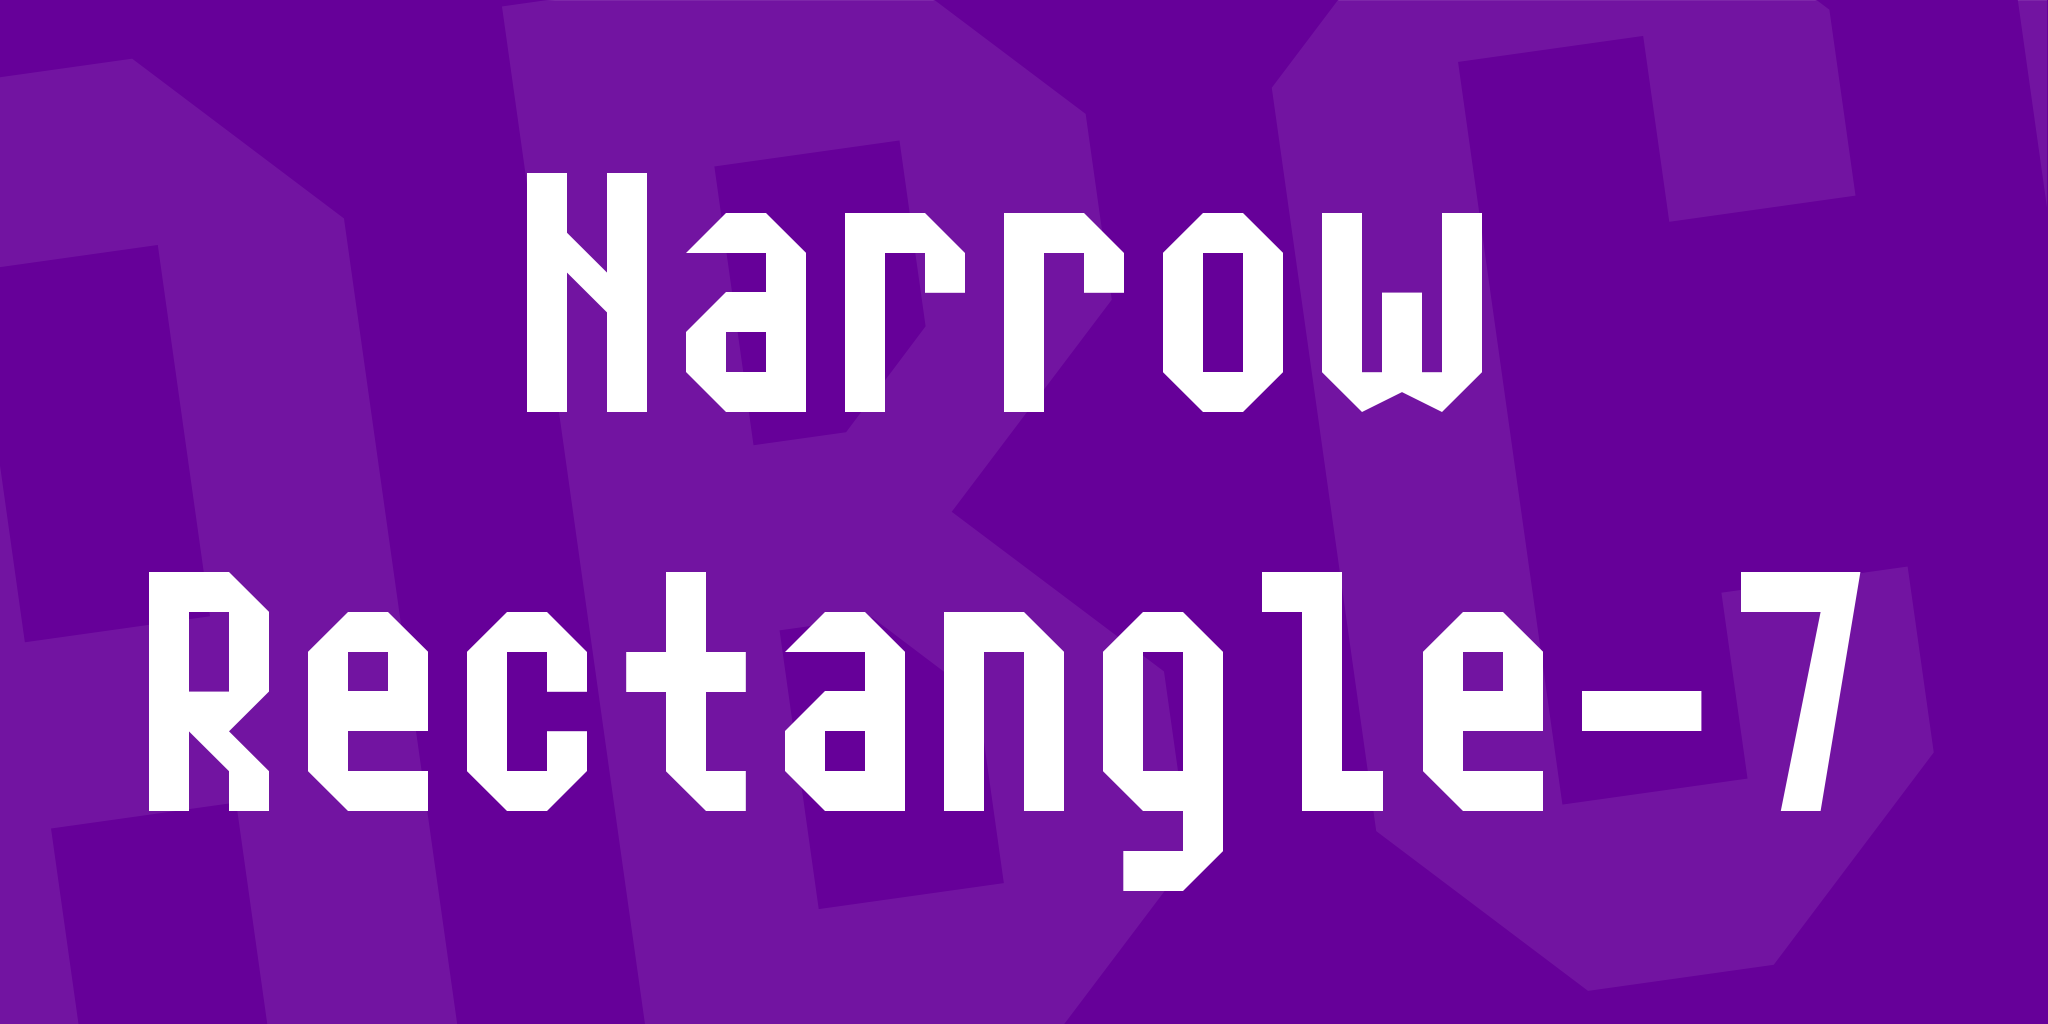 Narrow Rectangle 7